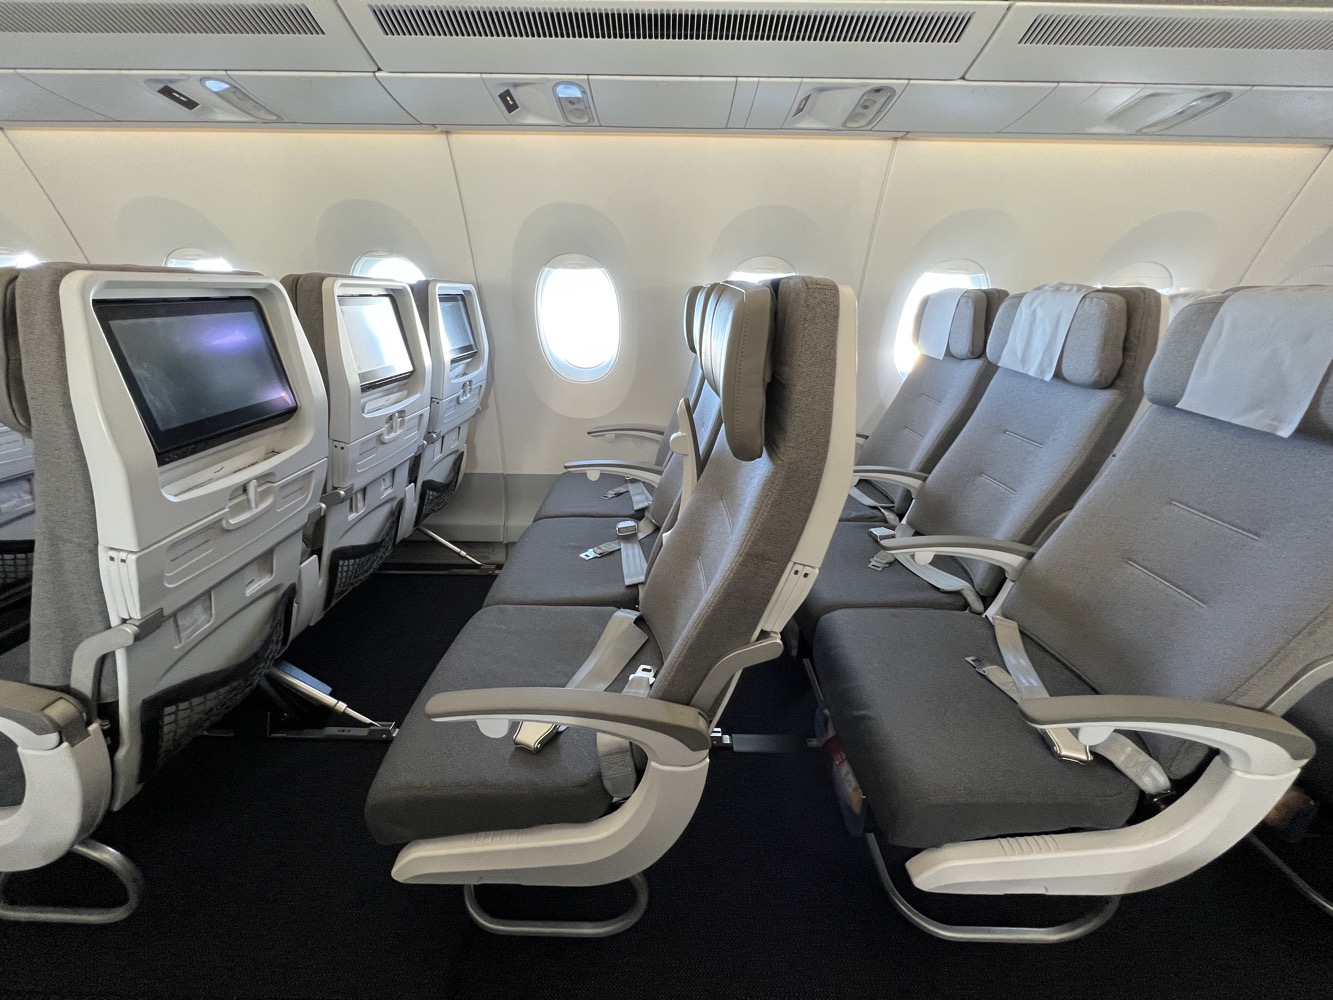 Finnair A350 Economy Class. Best leg room is in row 31 (bulkhead).